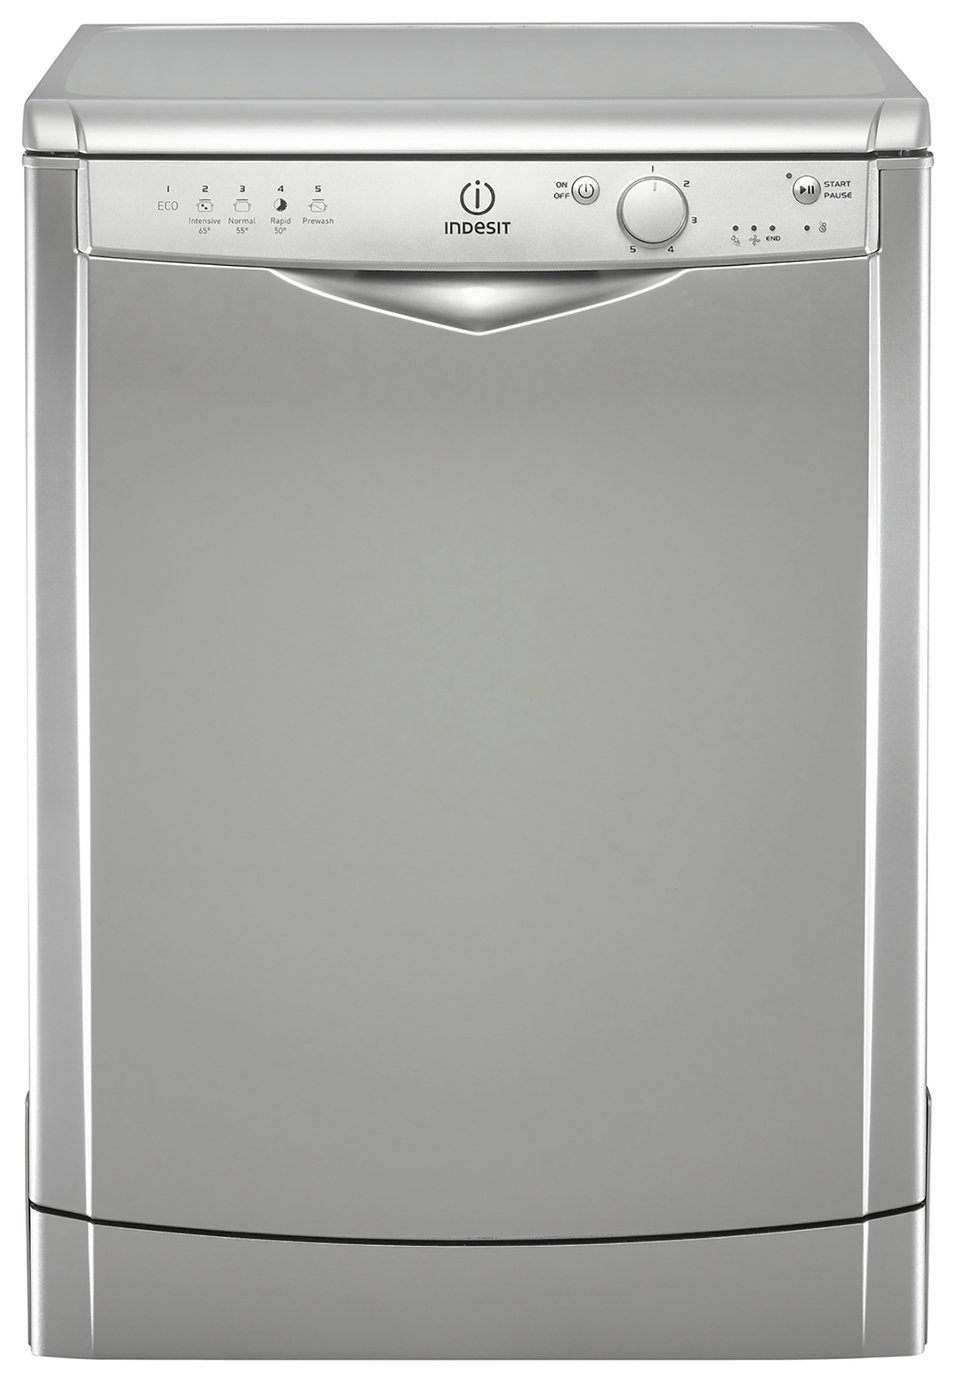 Indesit DFG15B1S Full Size Dishwasher - Silver